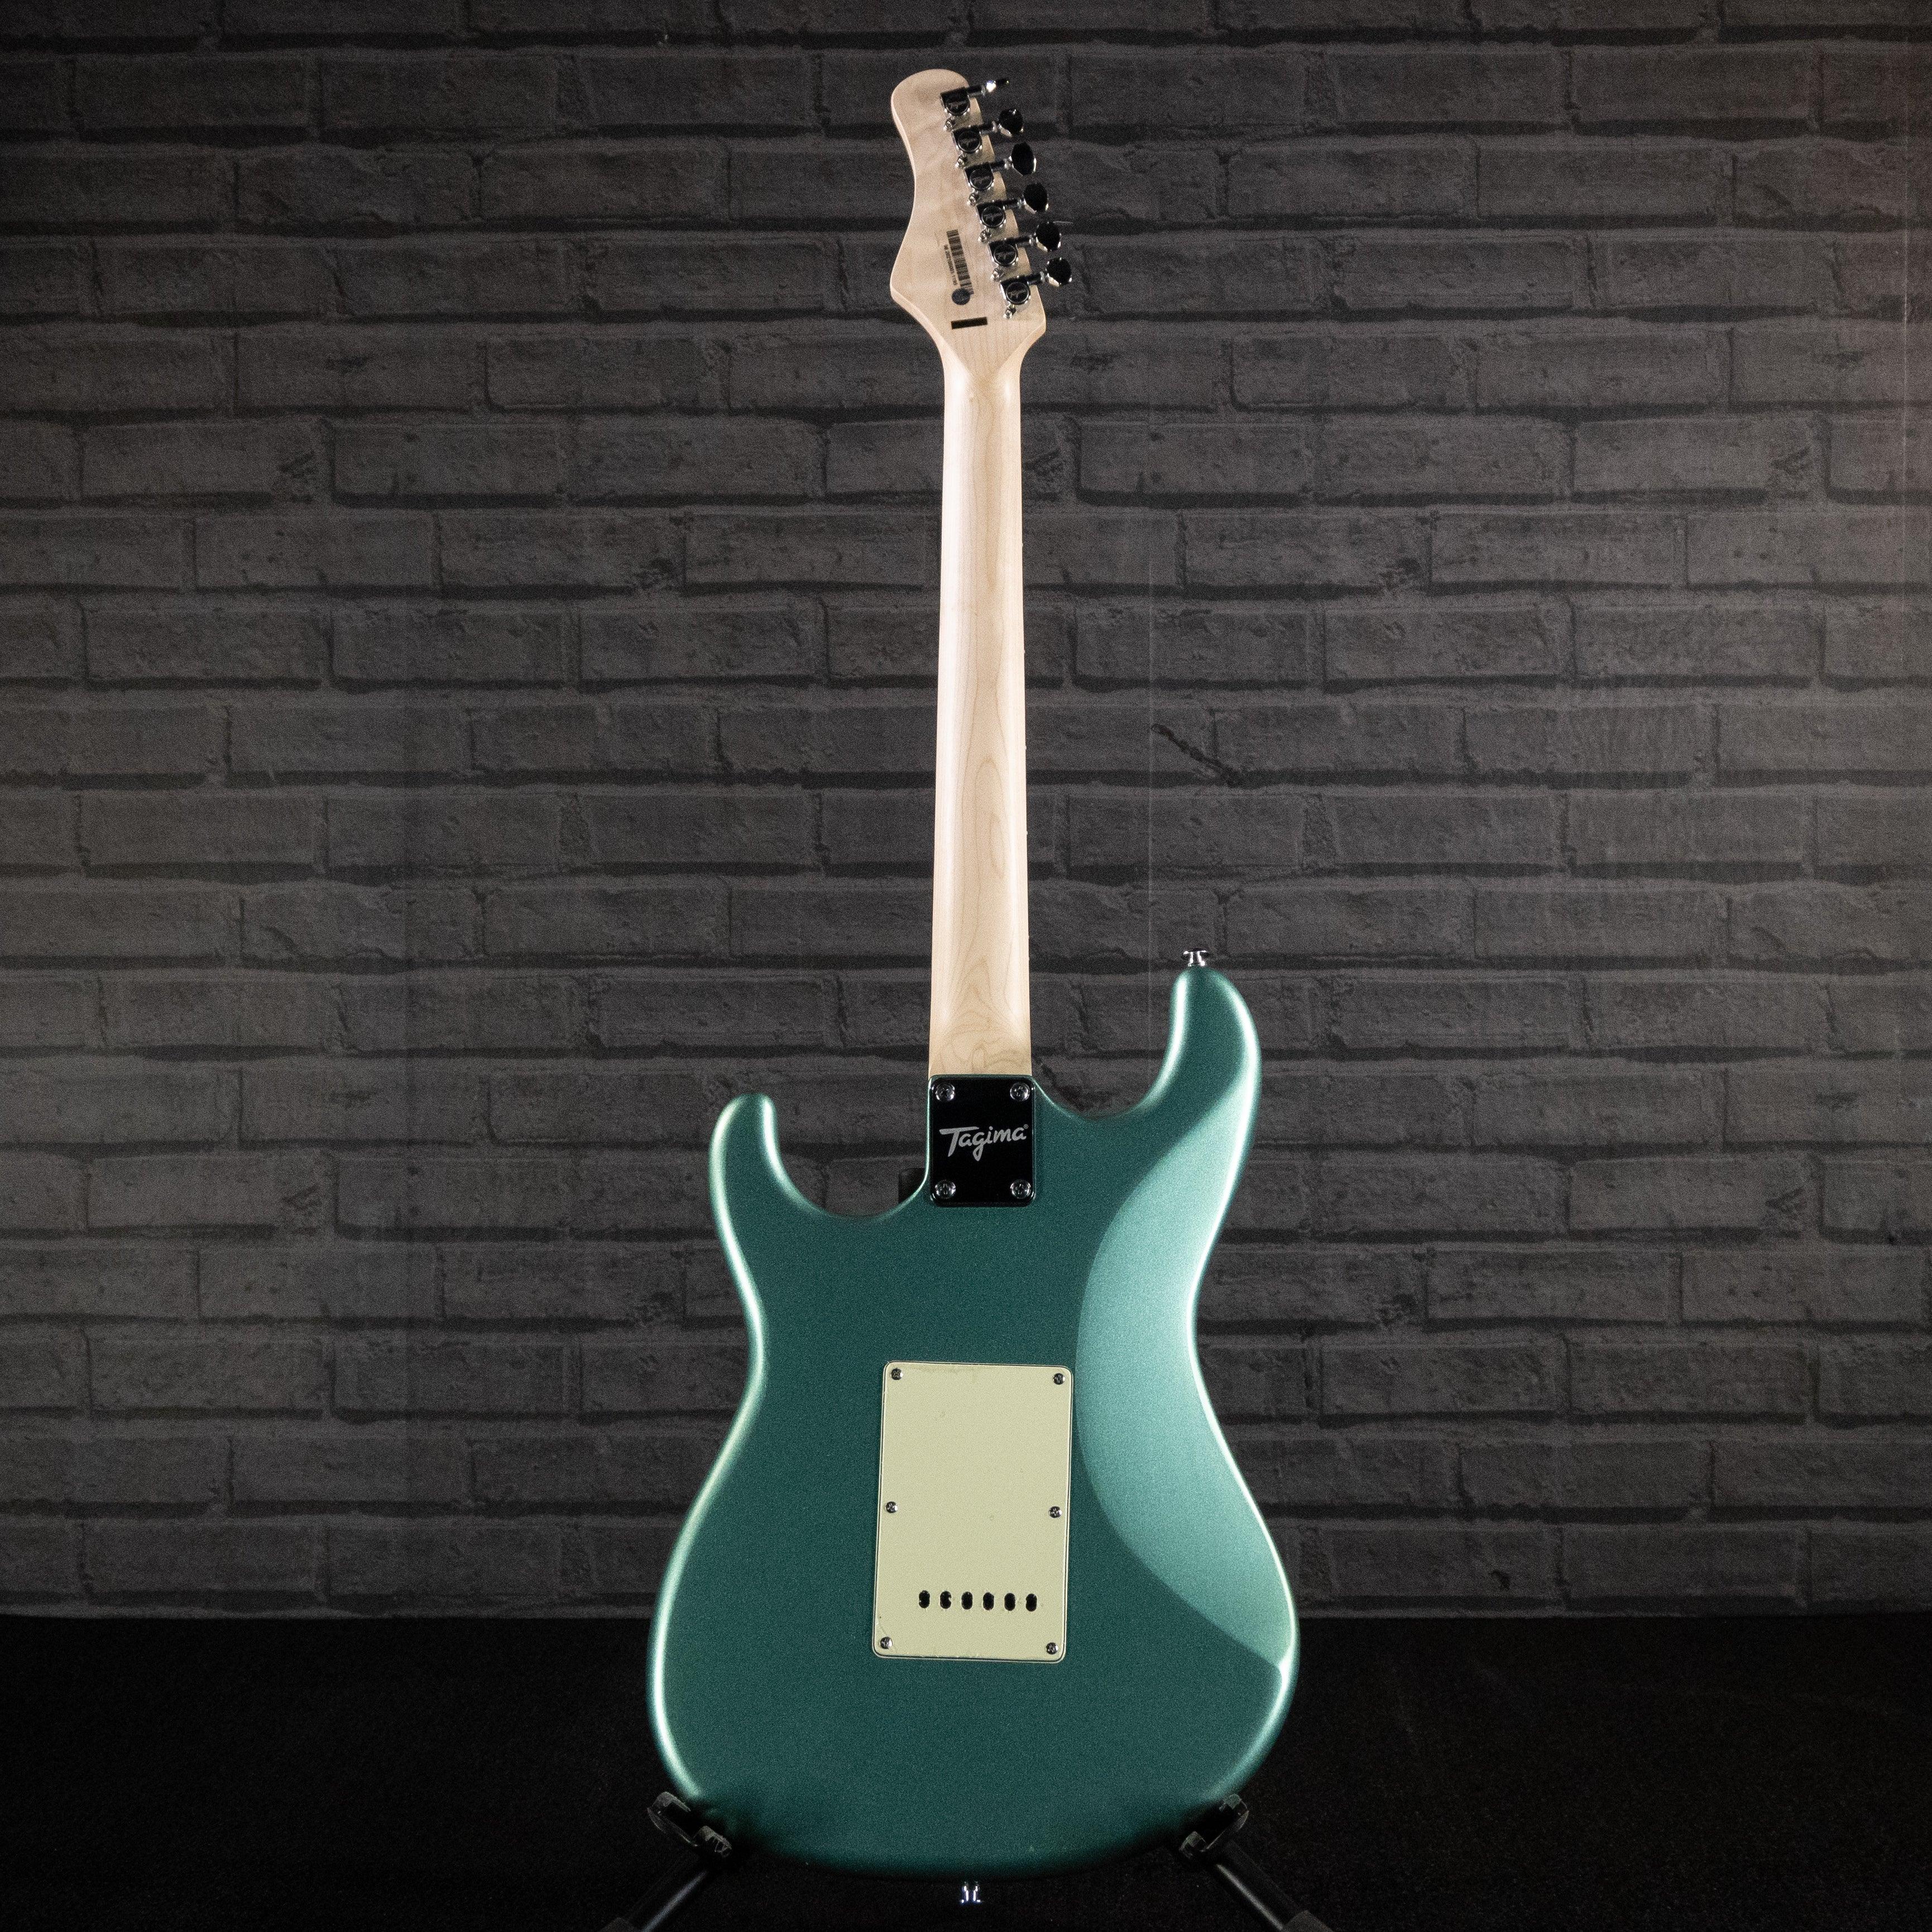 Tagima TG-500 Electric Guitar (Metallic Surf Green) - Impulse Music Co.